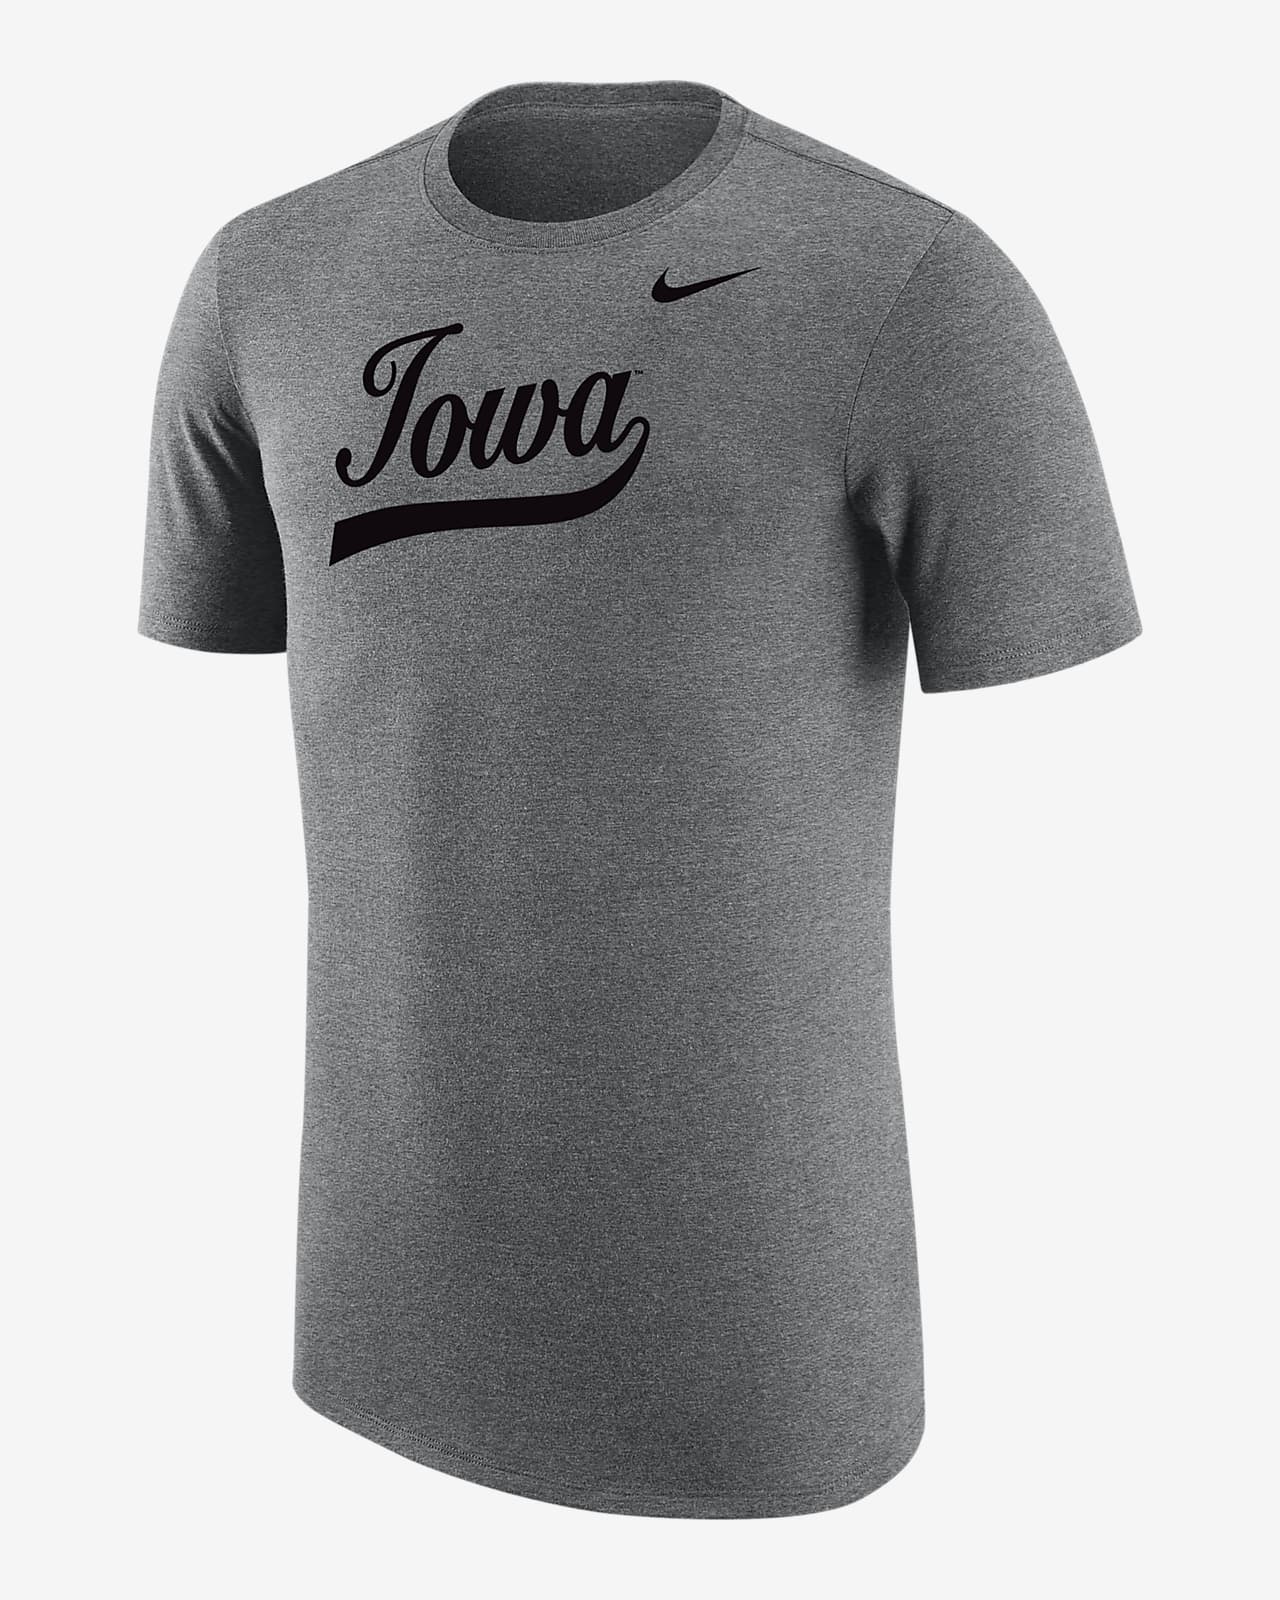 Iowa Men's Nike College T-Shirt